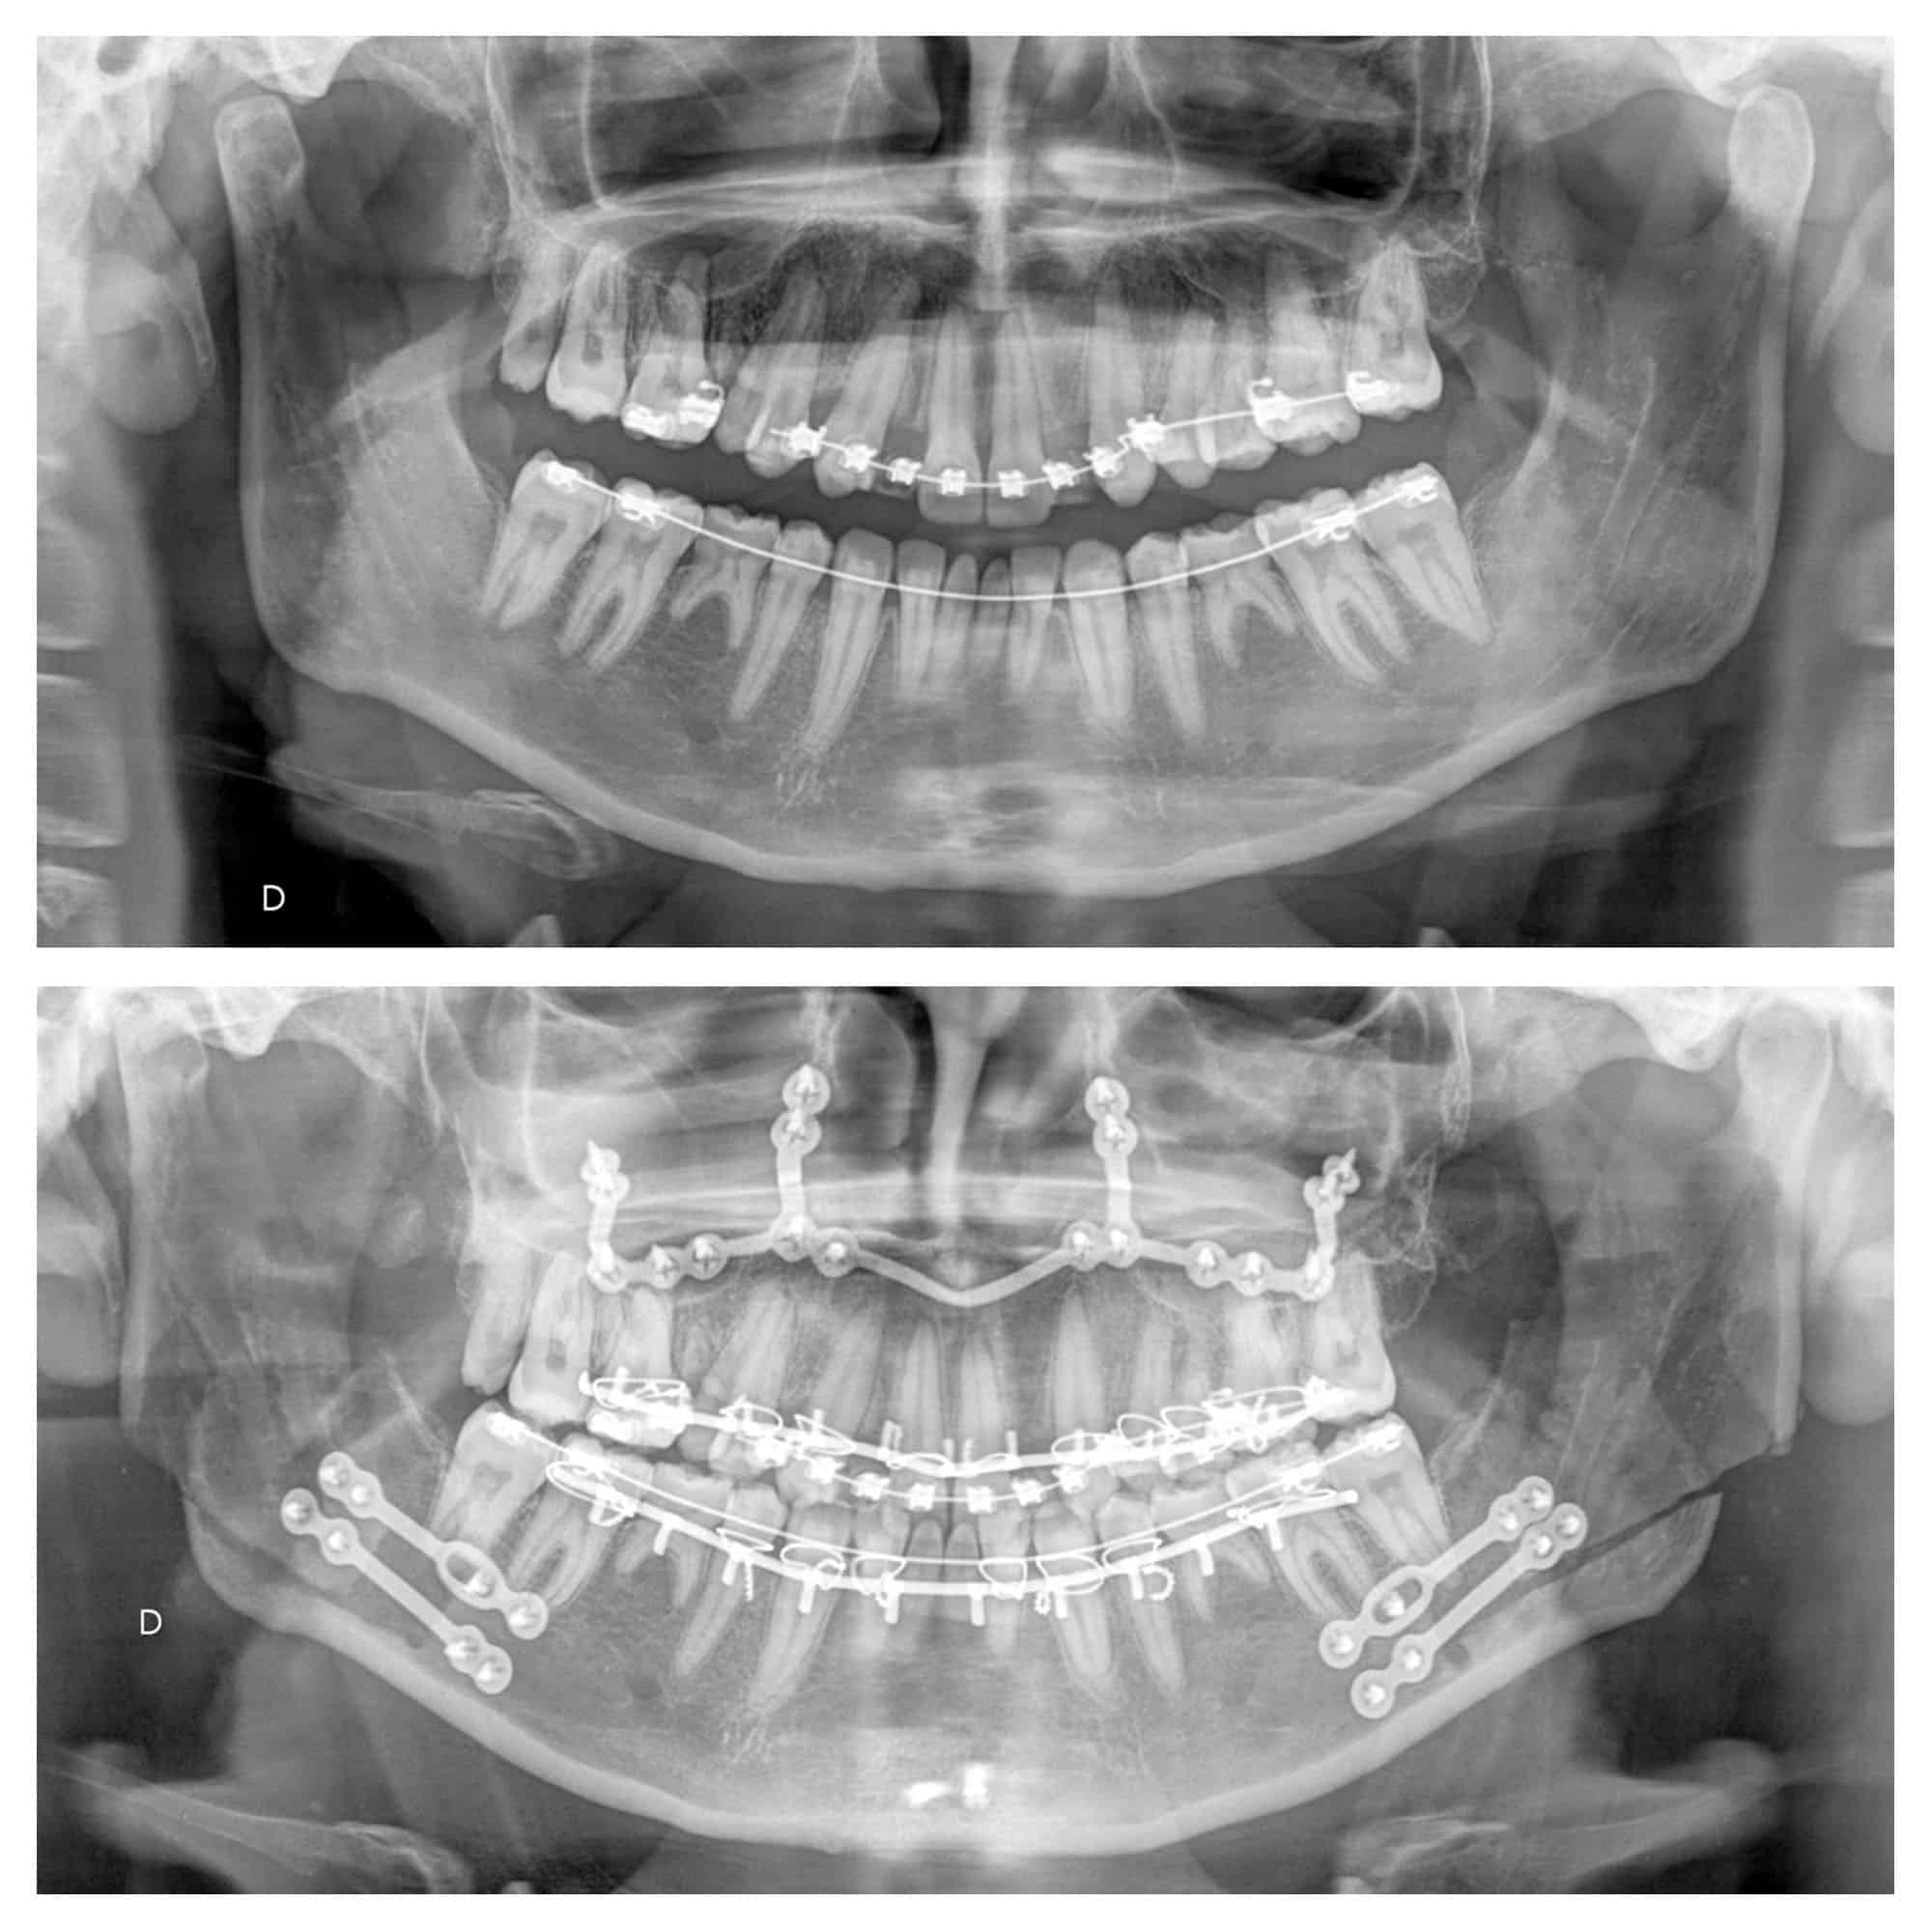 classe II radiographie radio chirurgien maxillo facial paris meilleur cas chirurgie bimaxillaire 7 trois quart flouté